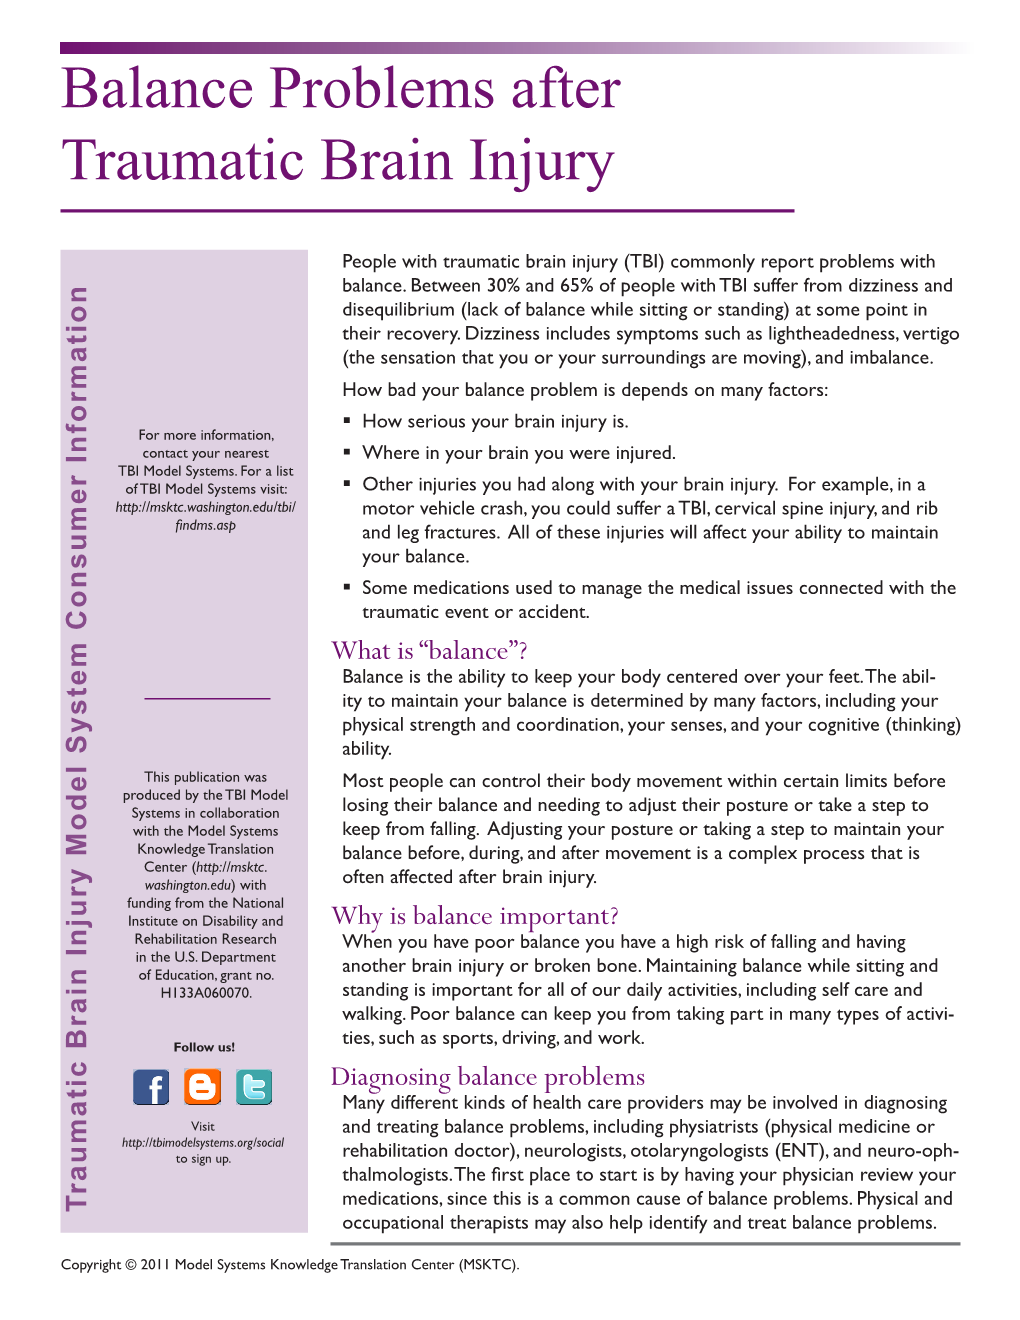 Balance Problems After Traumatic Brain Injury